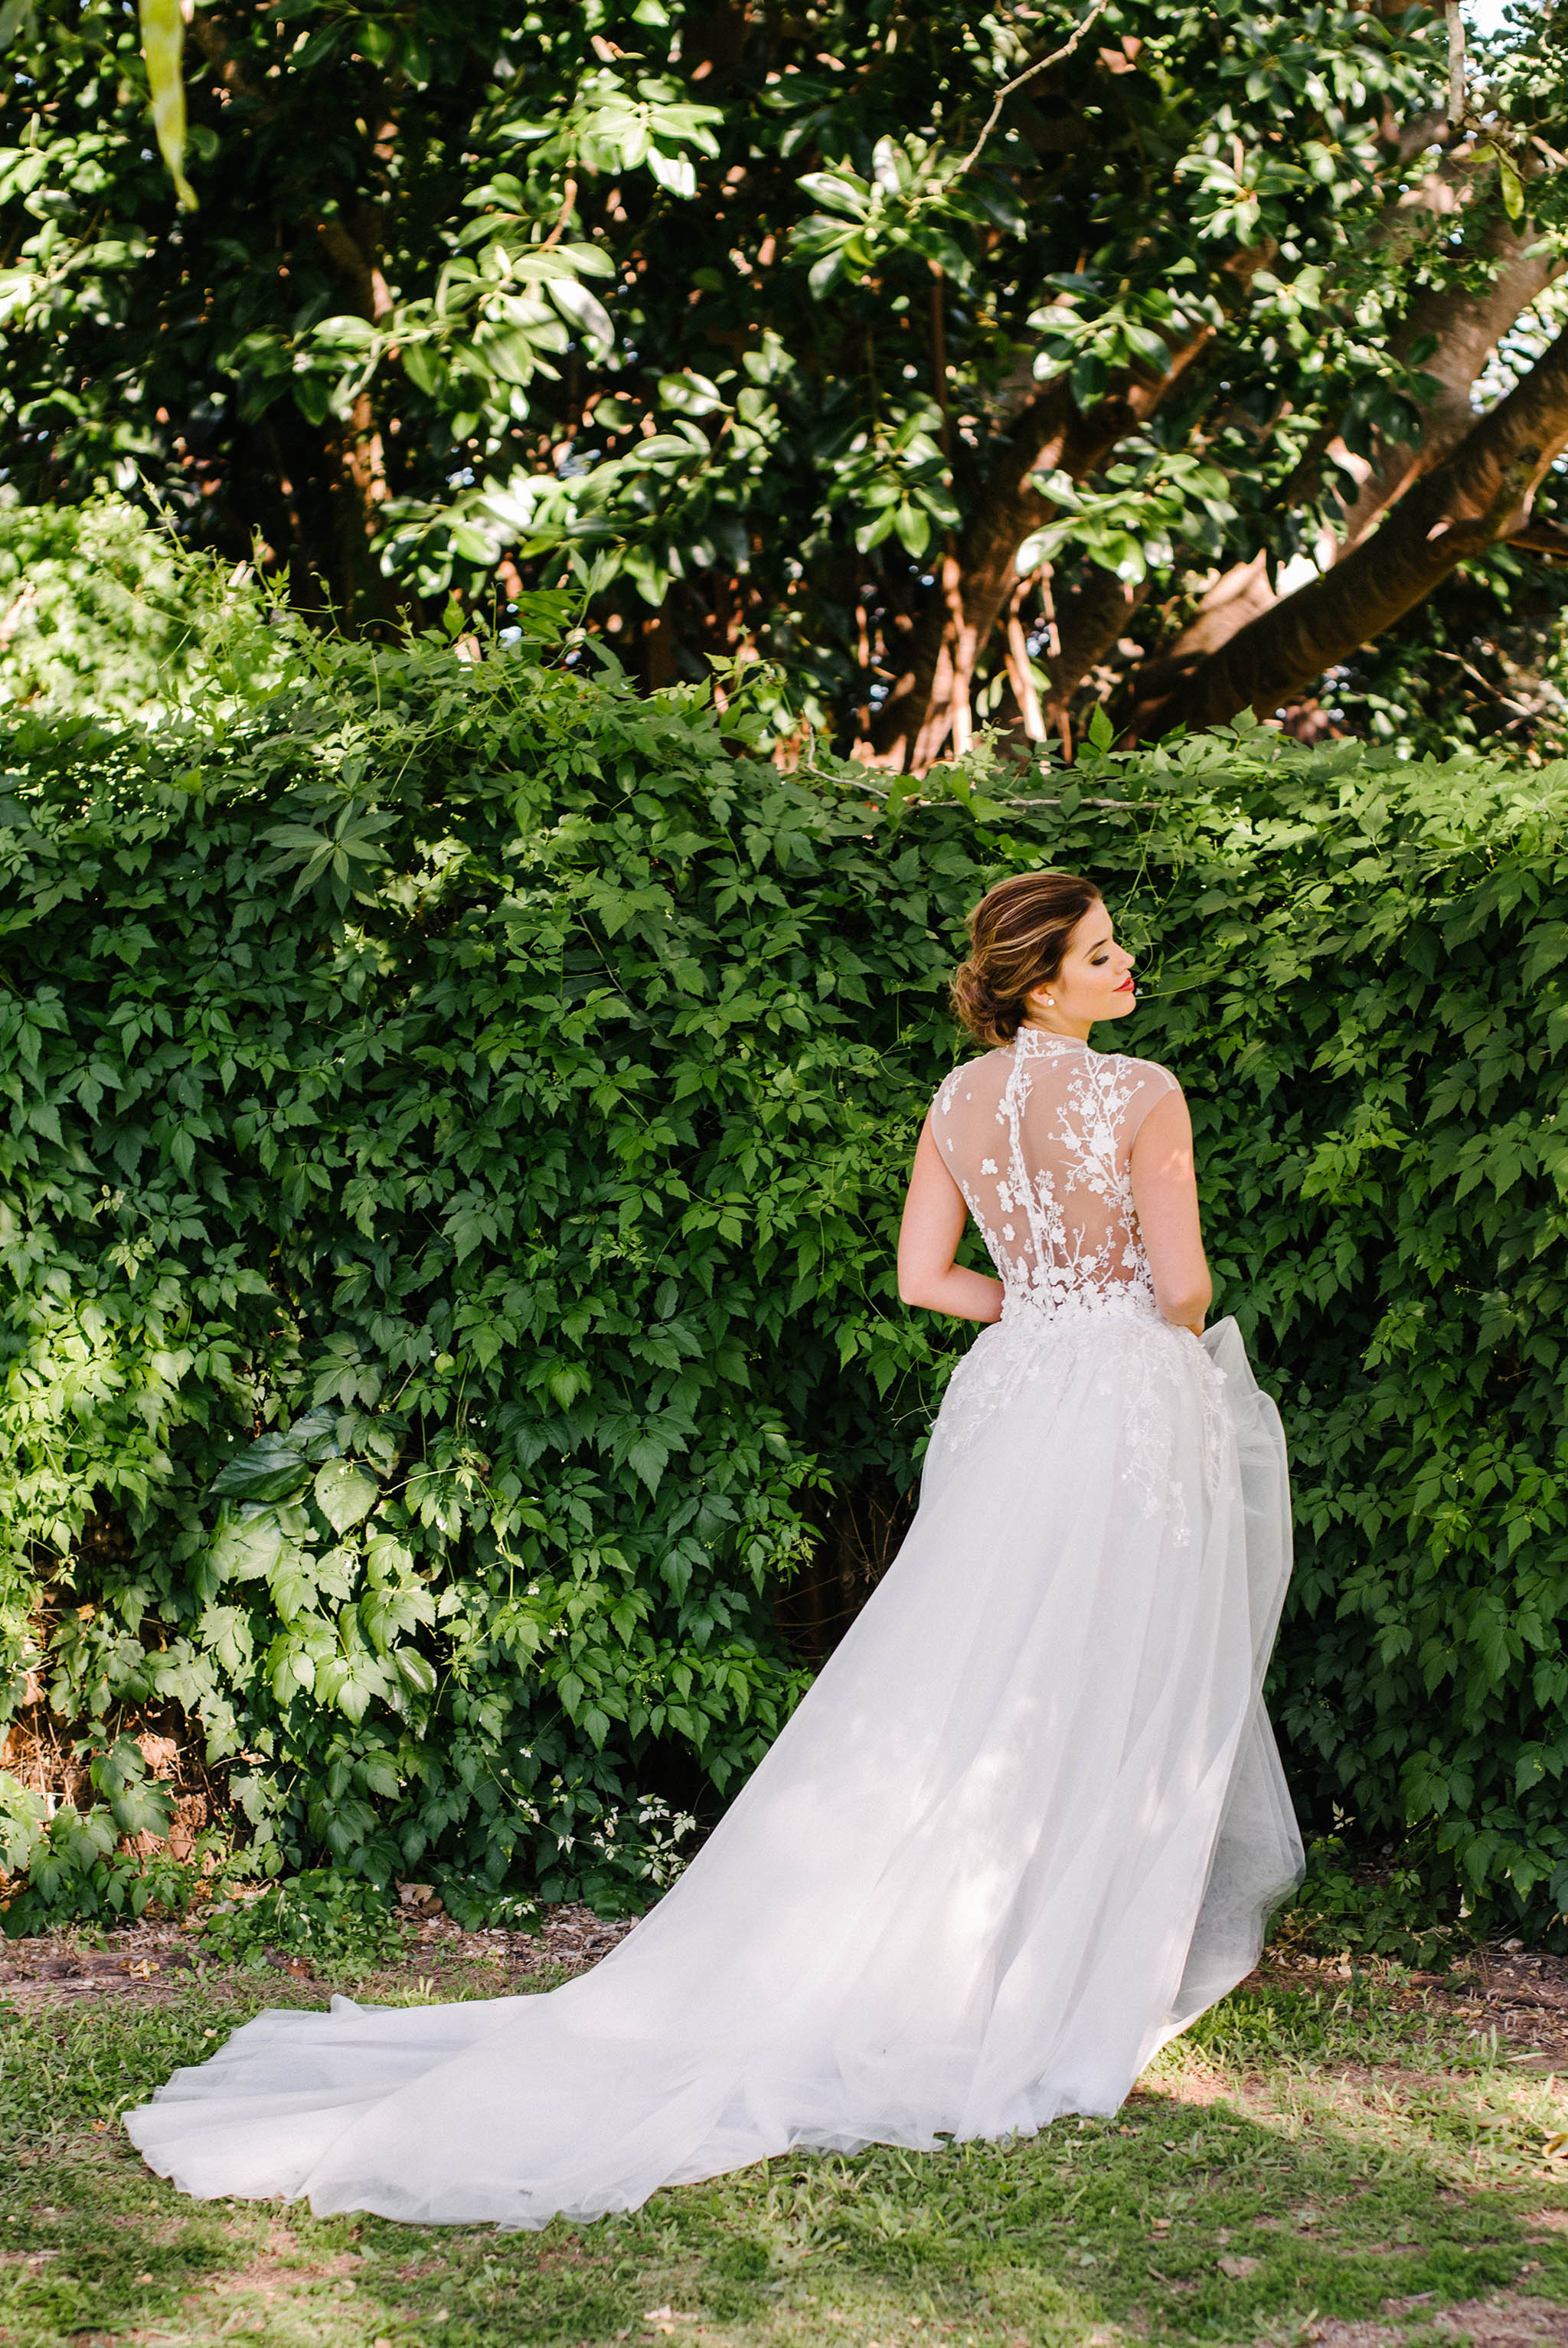 bride standing beside grass wall in wedding dress and outer skirt